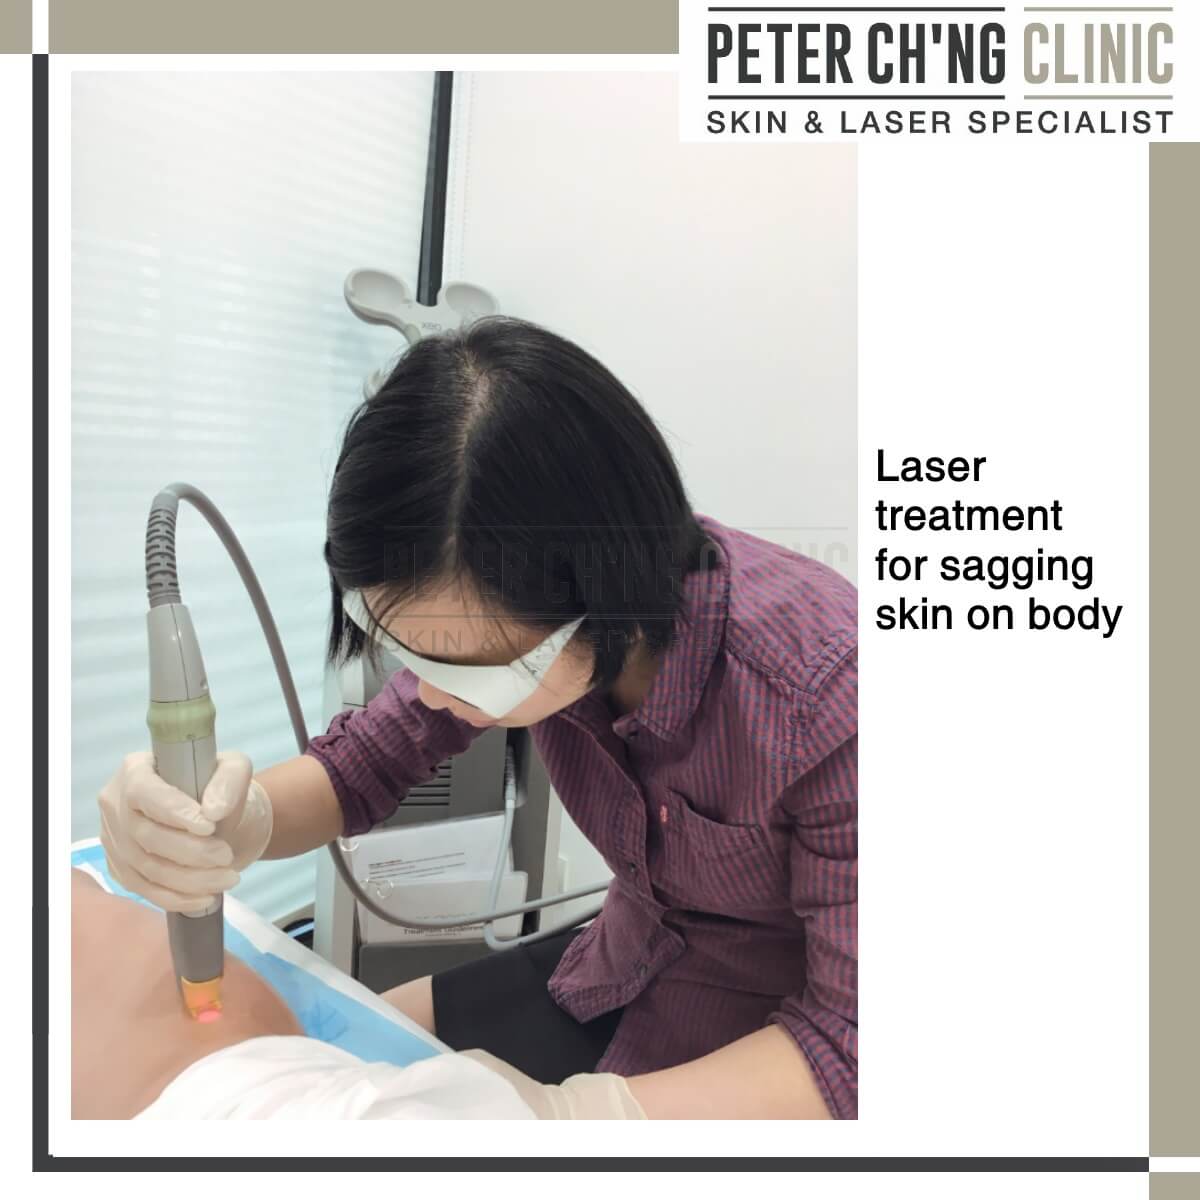 Laser treatment for sagging skin on body